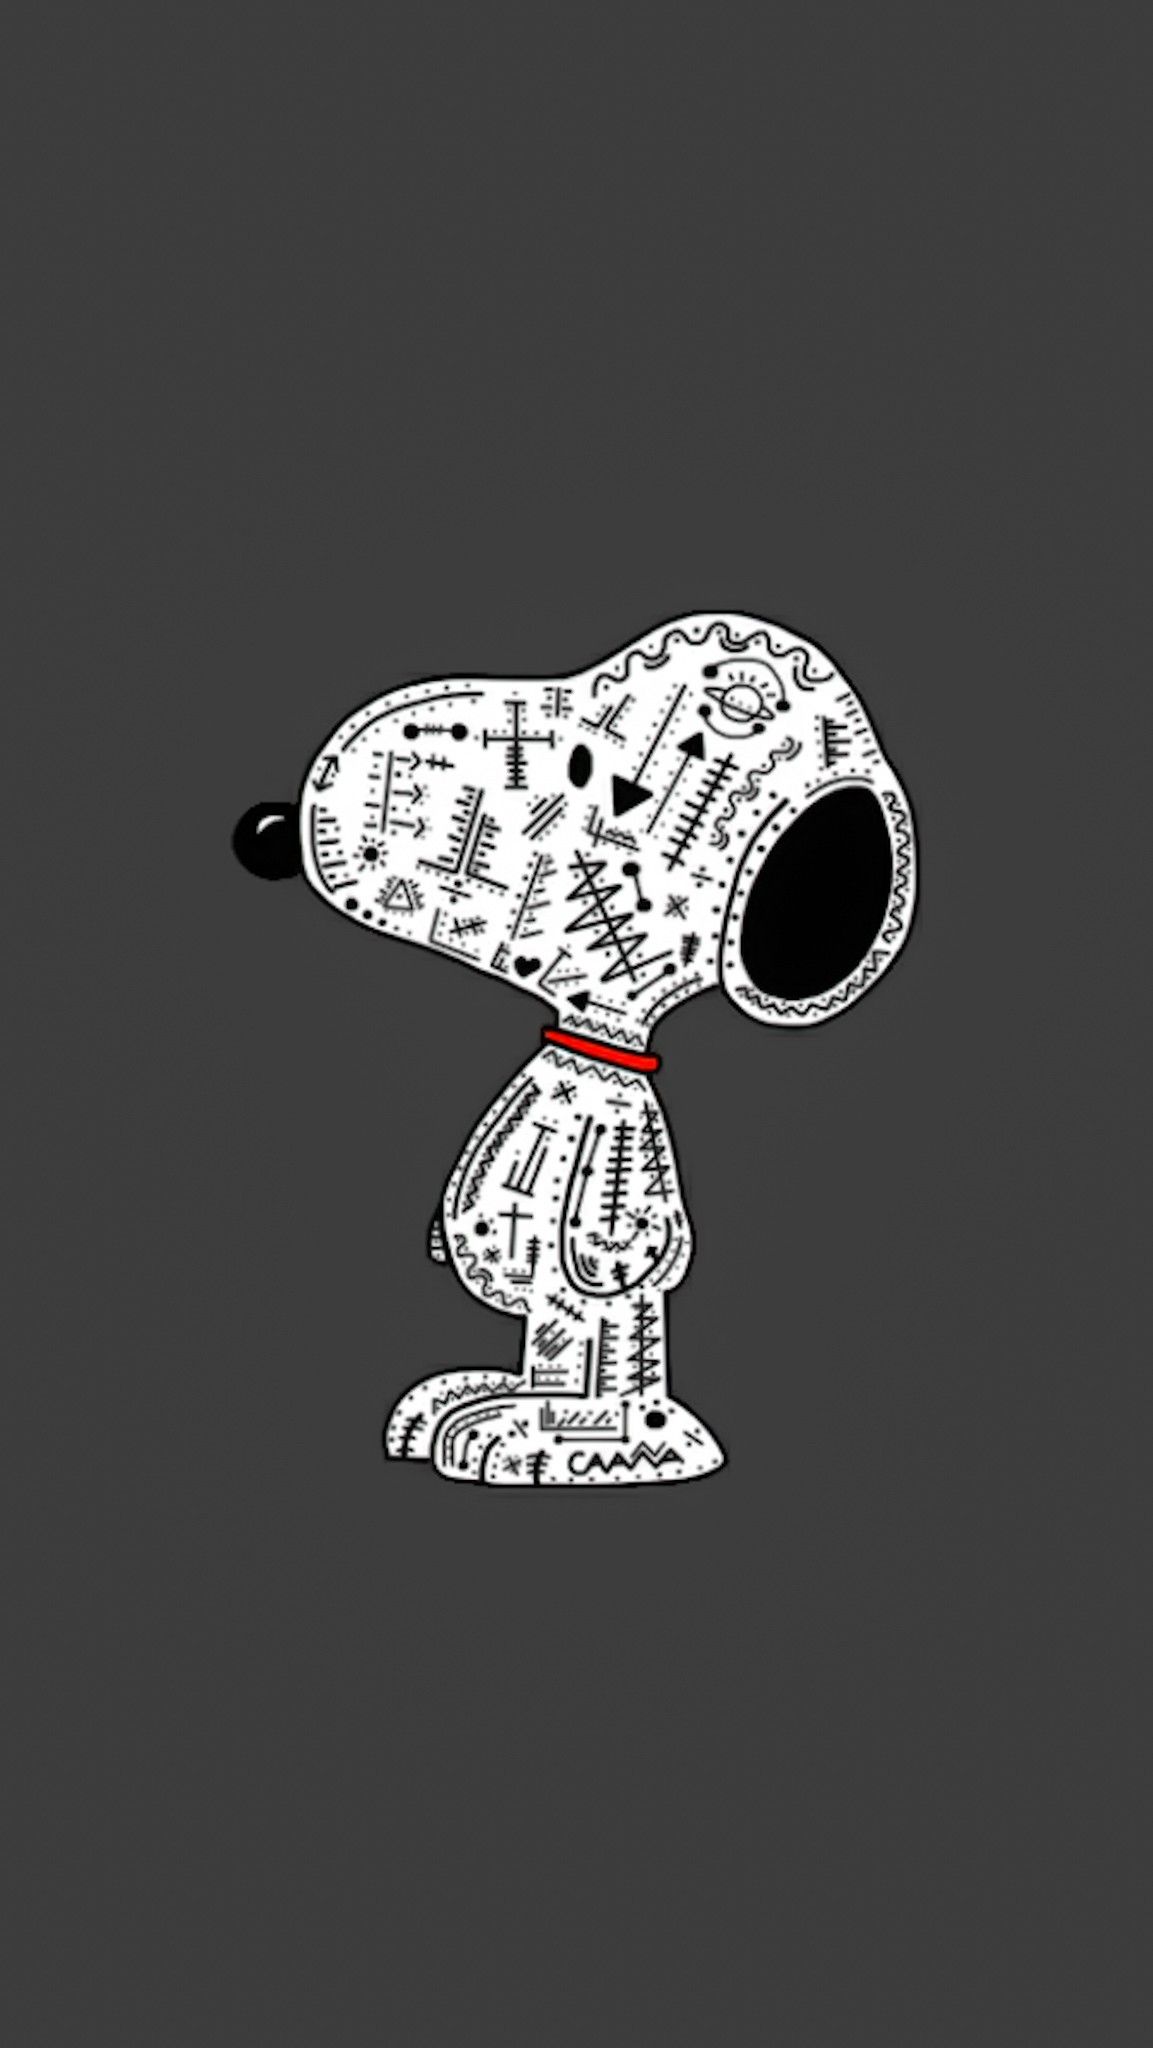 Snoopy. Snoopy wallpaper, Snoopy, Snoopy comics